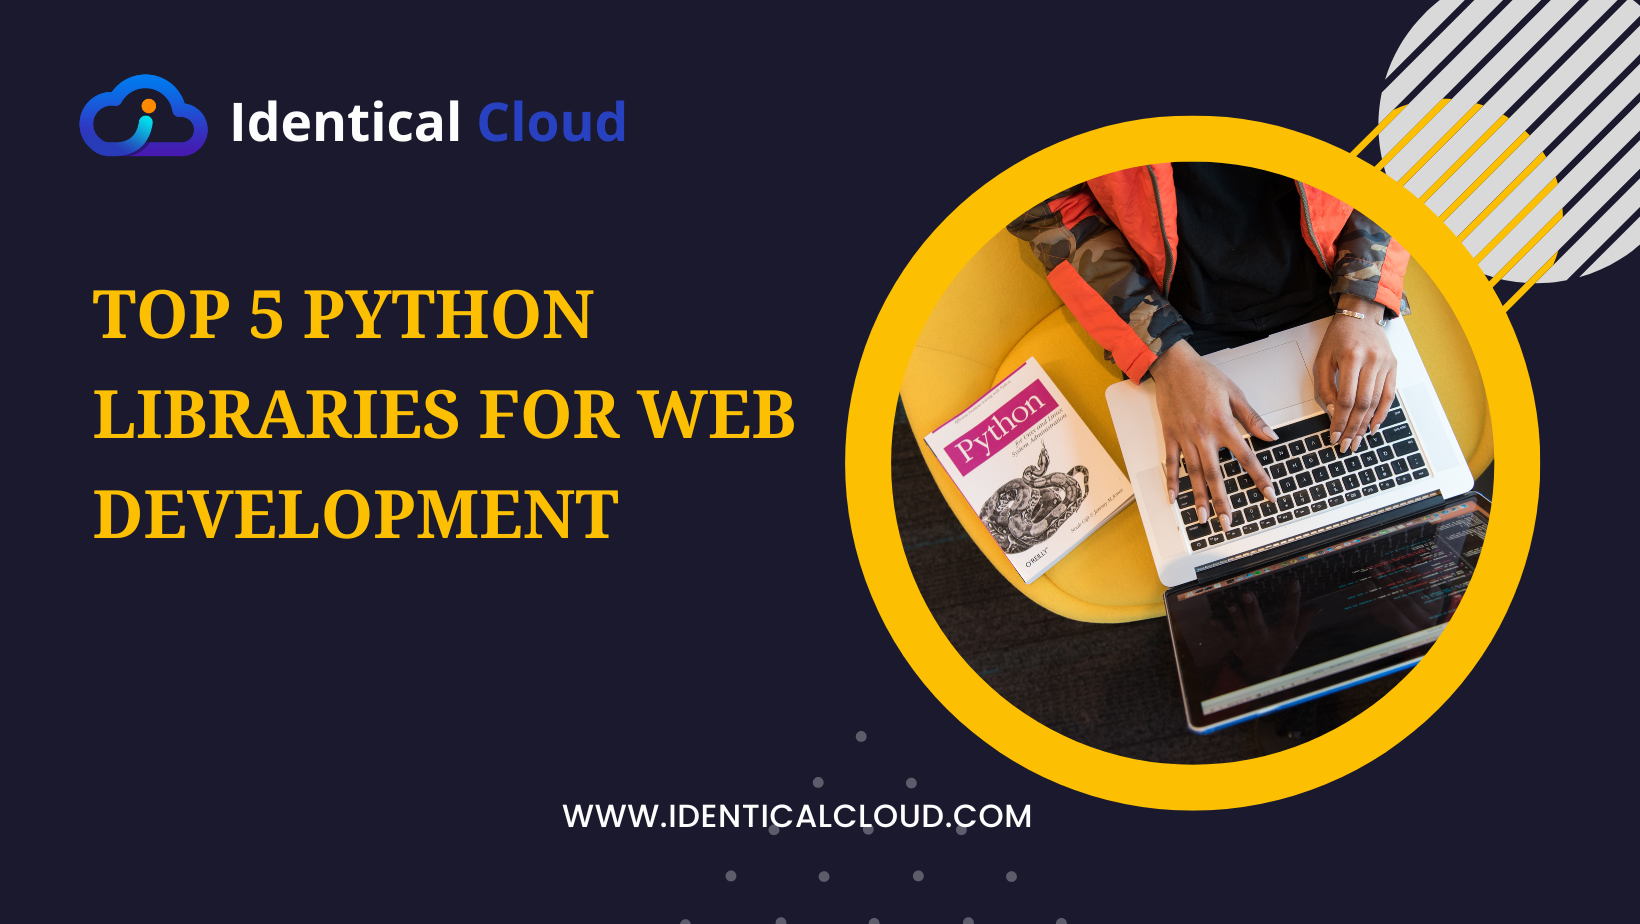 Top 5 Python Libraries for Web Development - identicalcloud.com